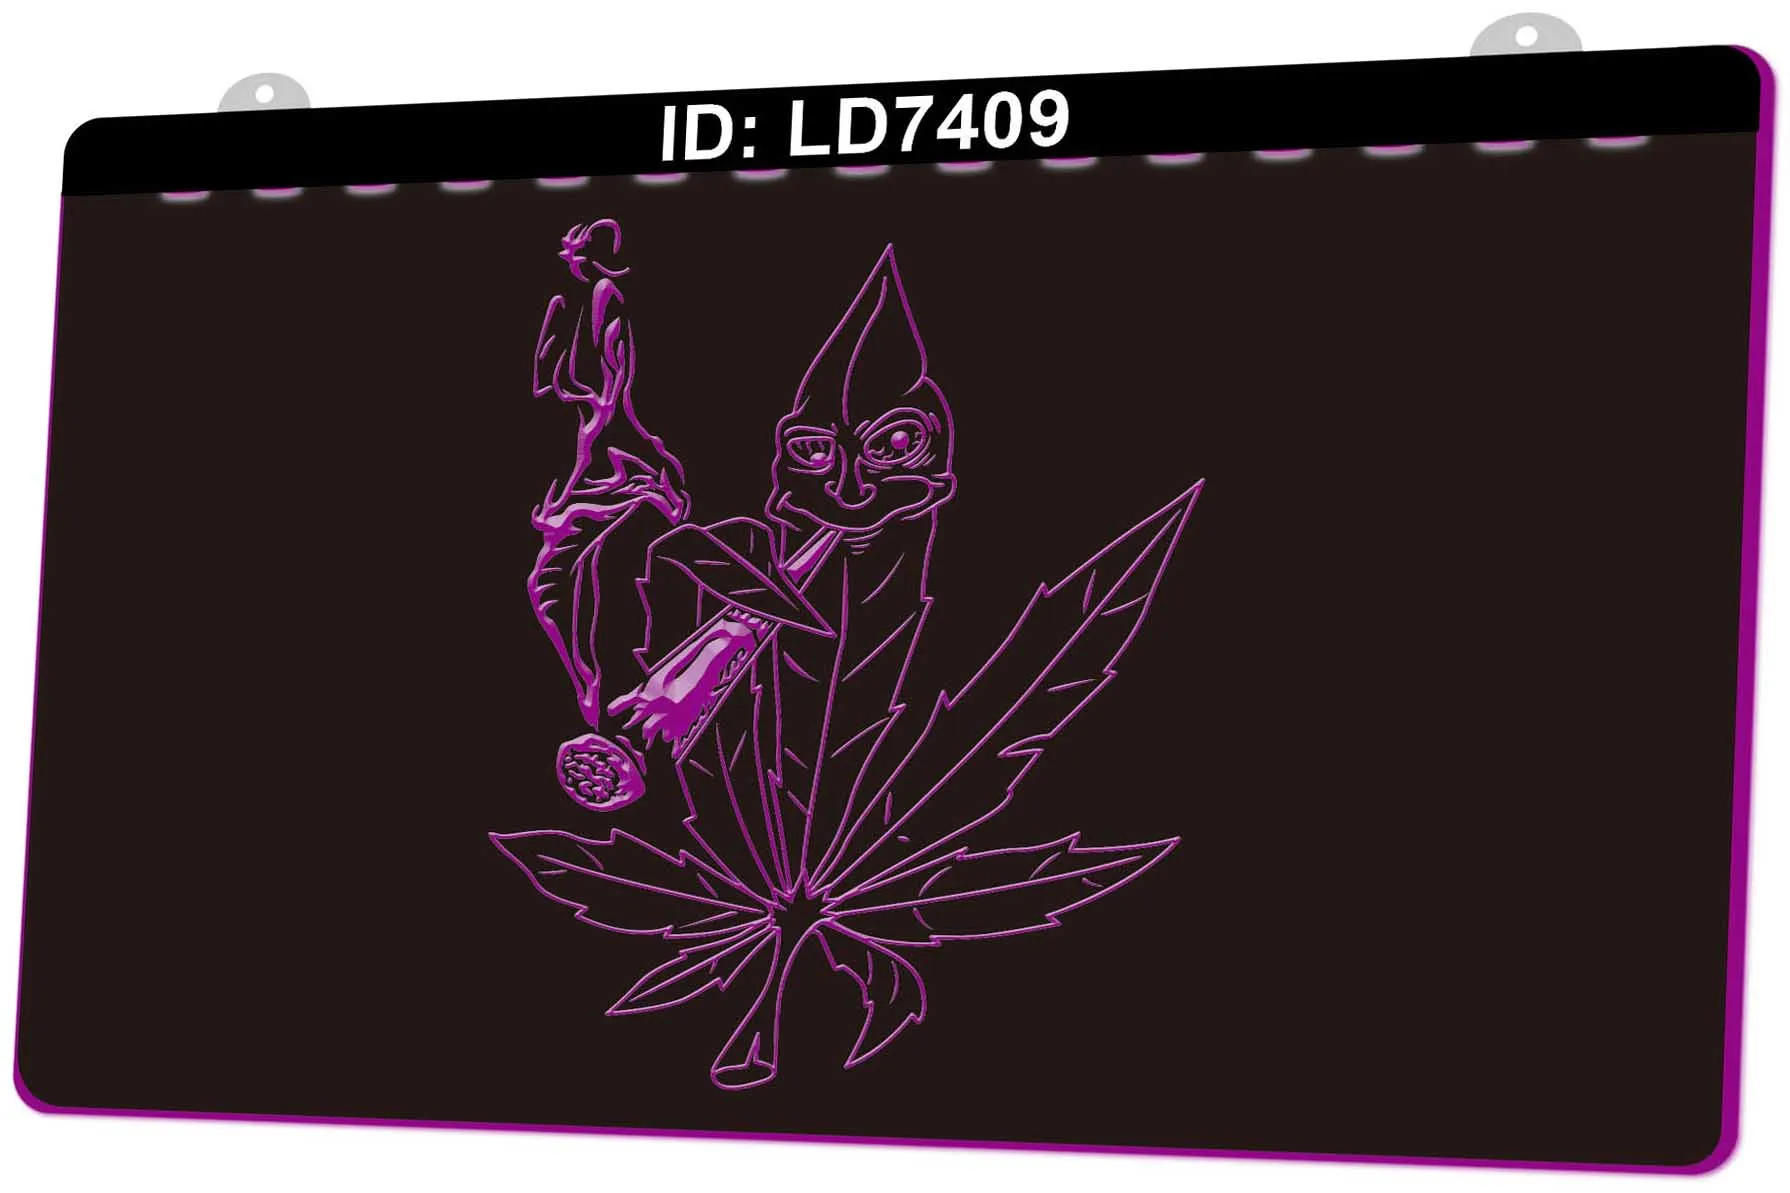 LD7409 Smoke Leaf Girl Gravure 3D LED Light Sign Vente en gros au détail